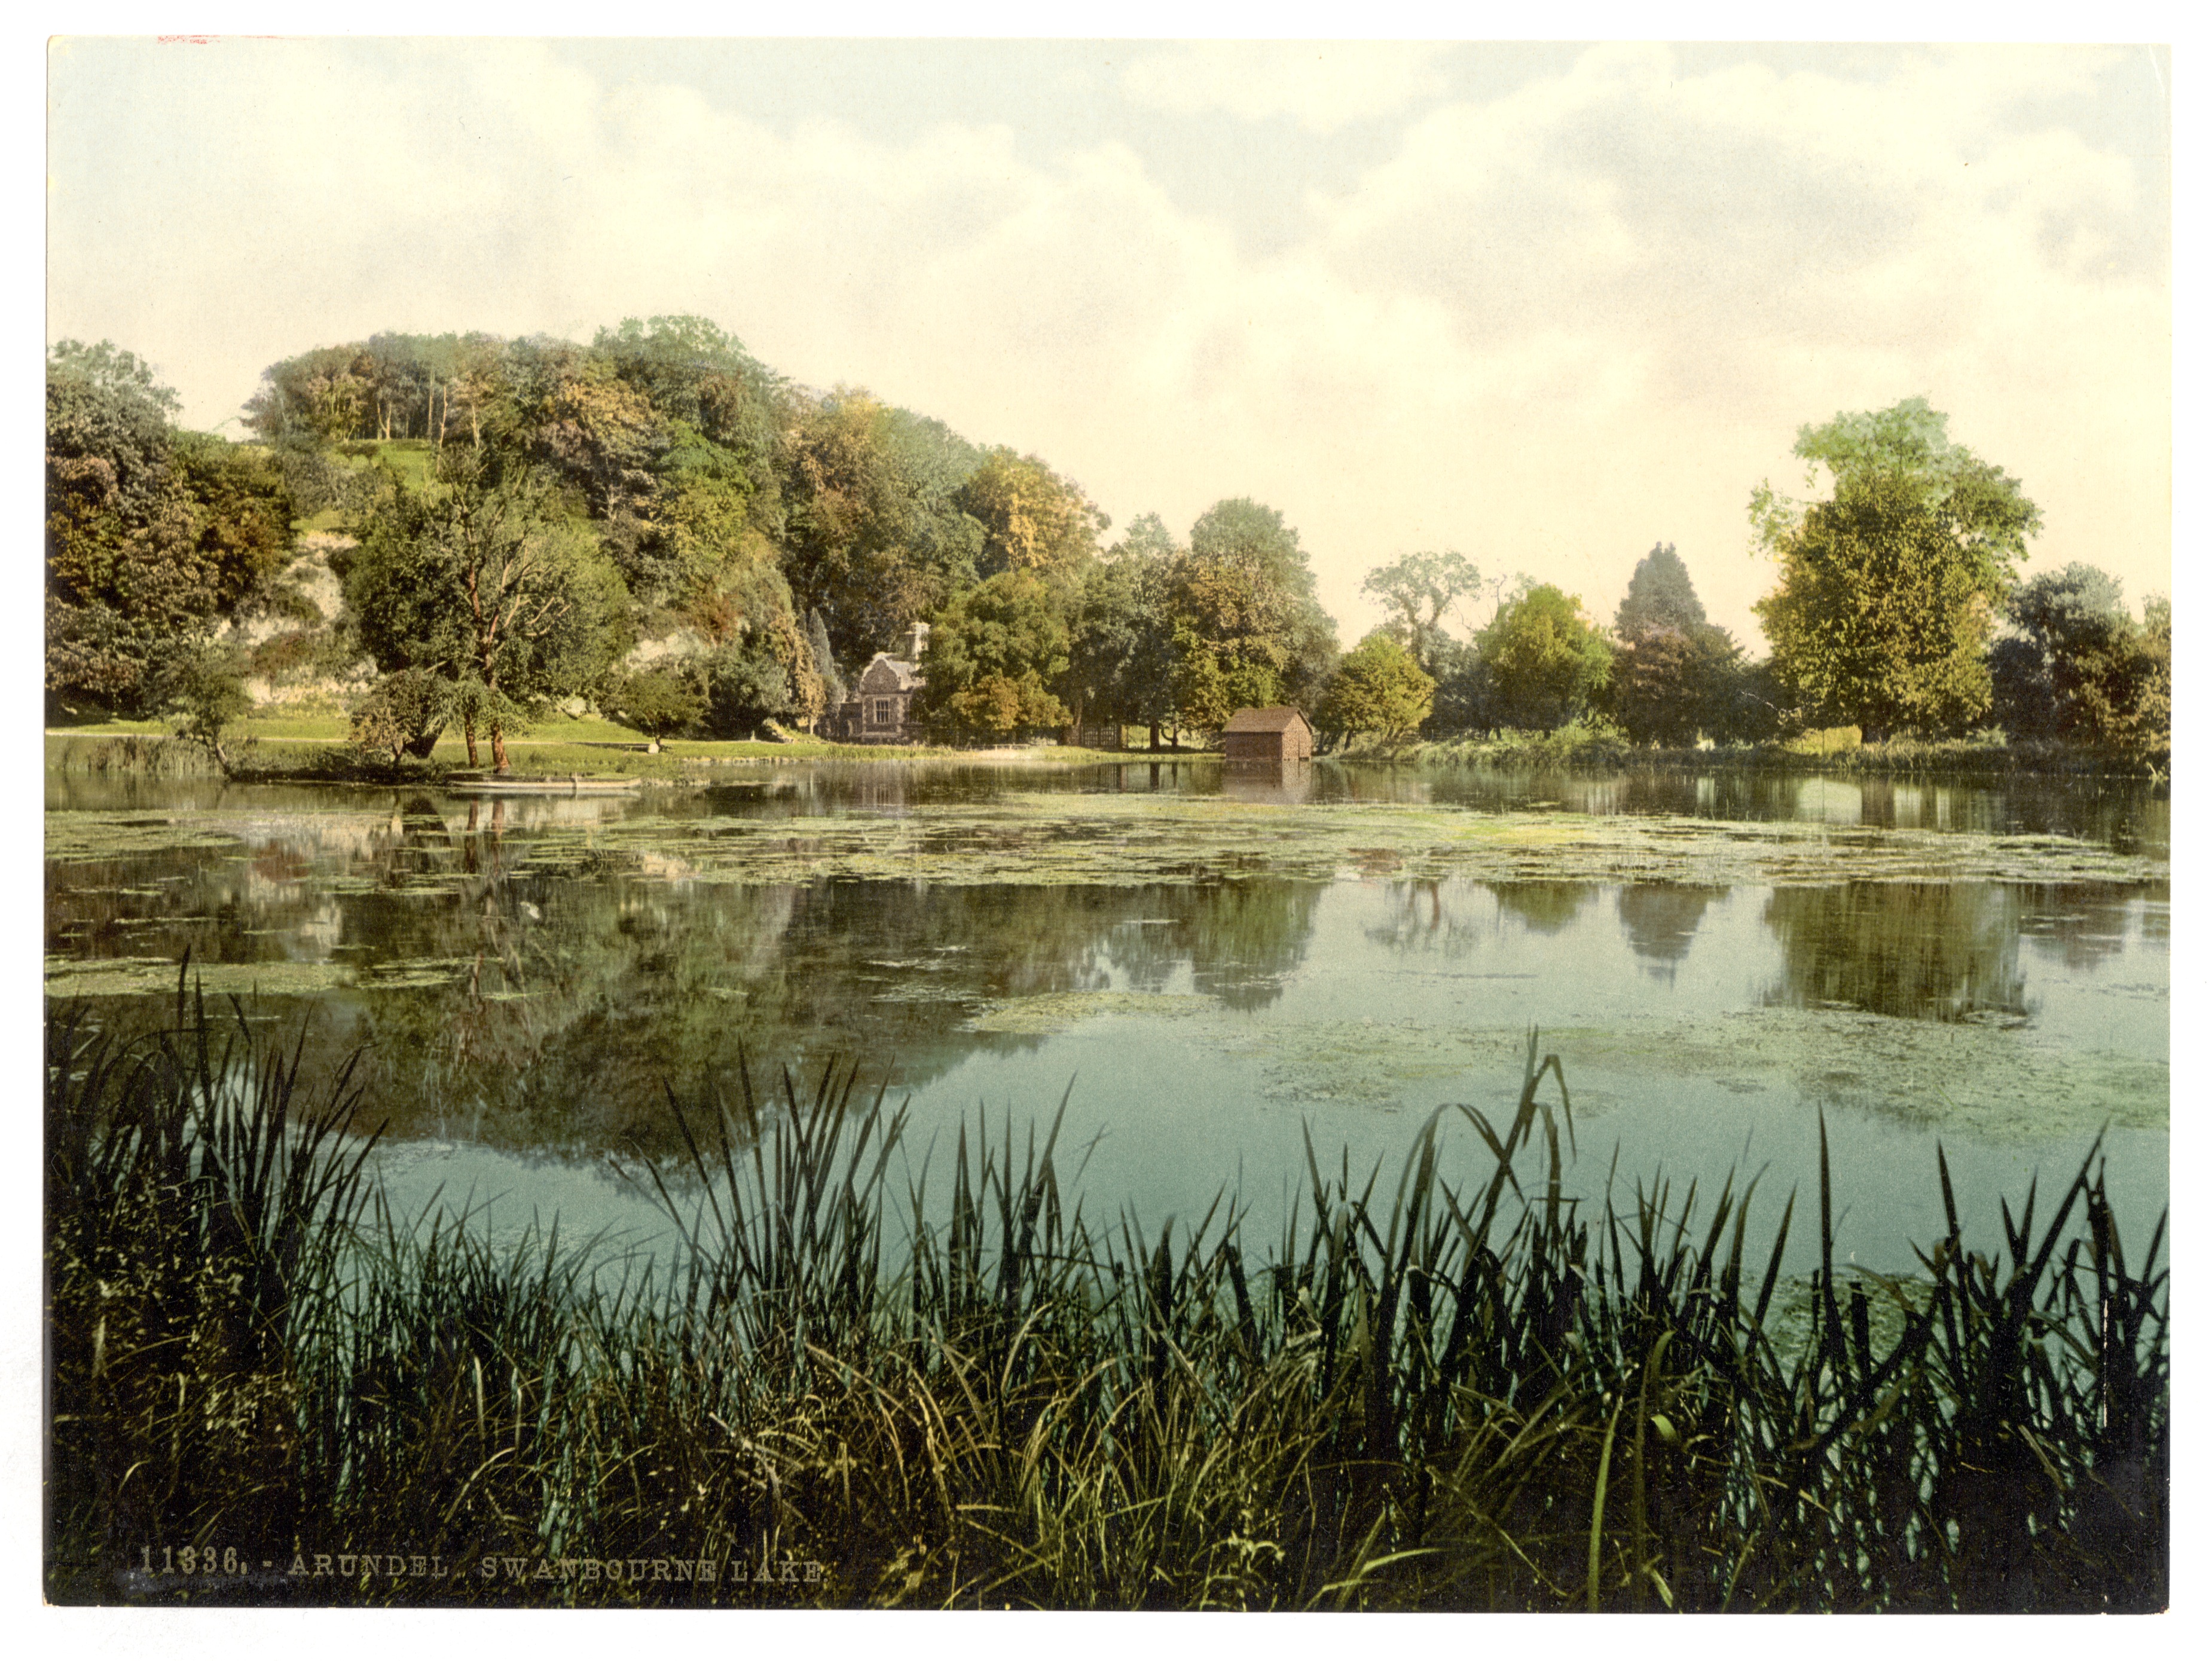 Swanbourne Lake, Arundel Castle, England-LCCN2002696359